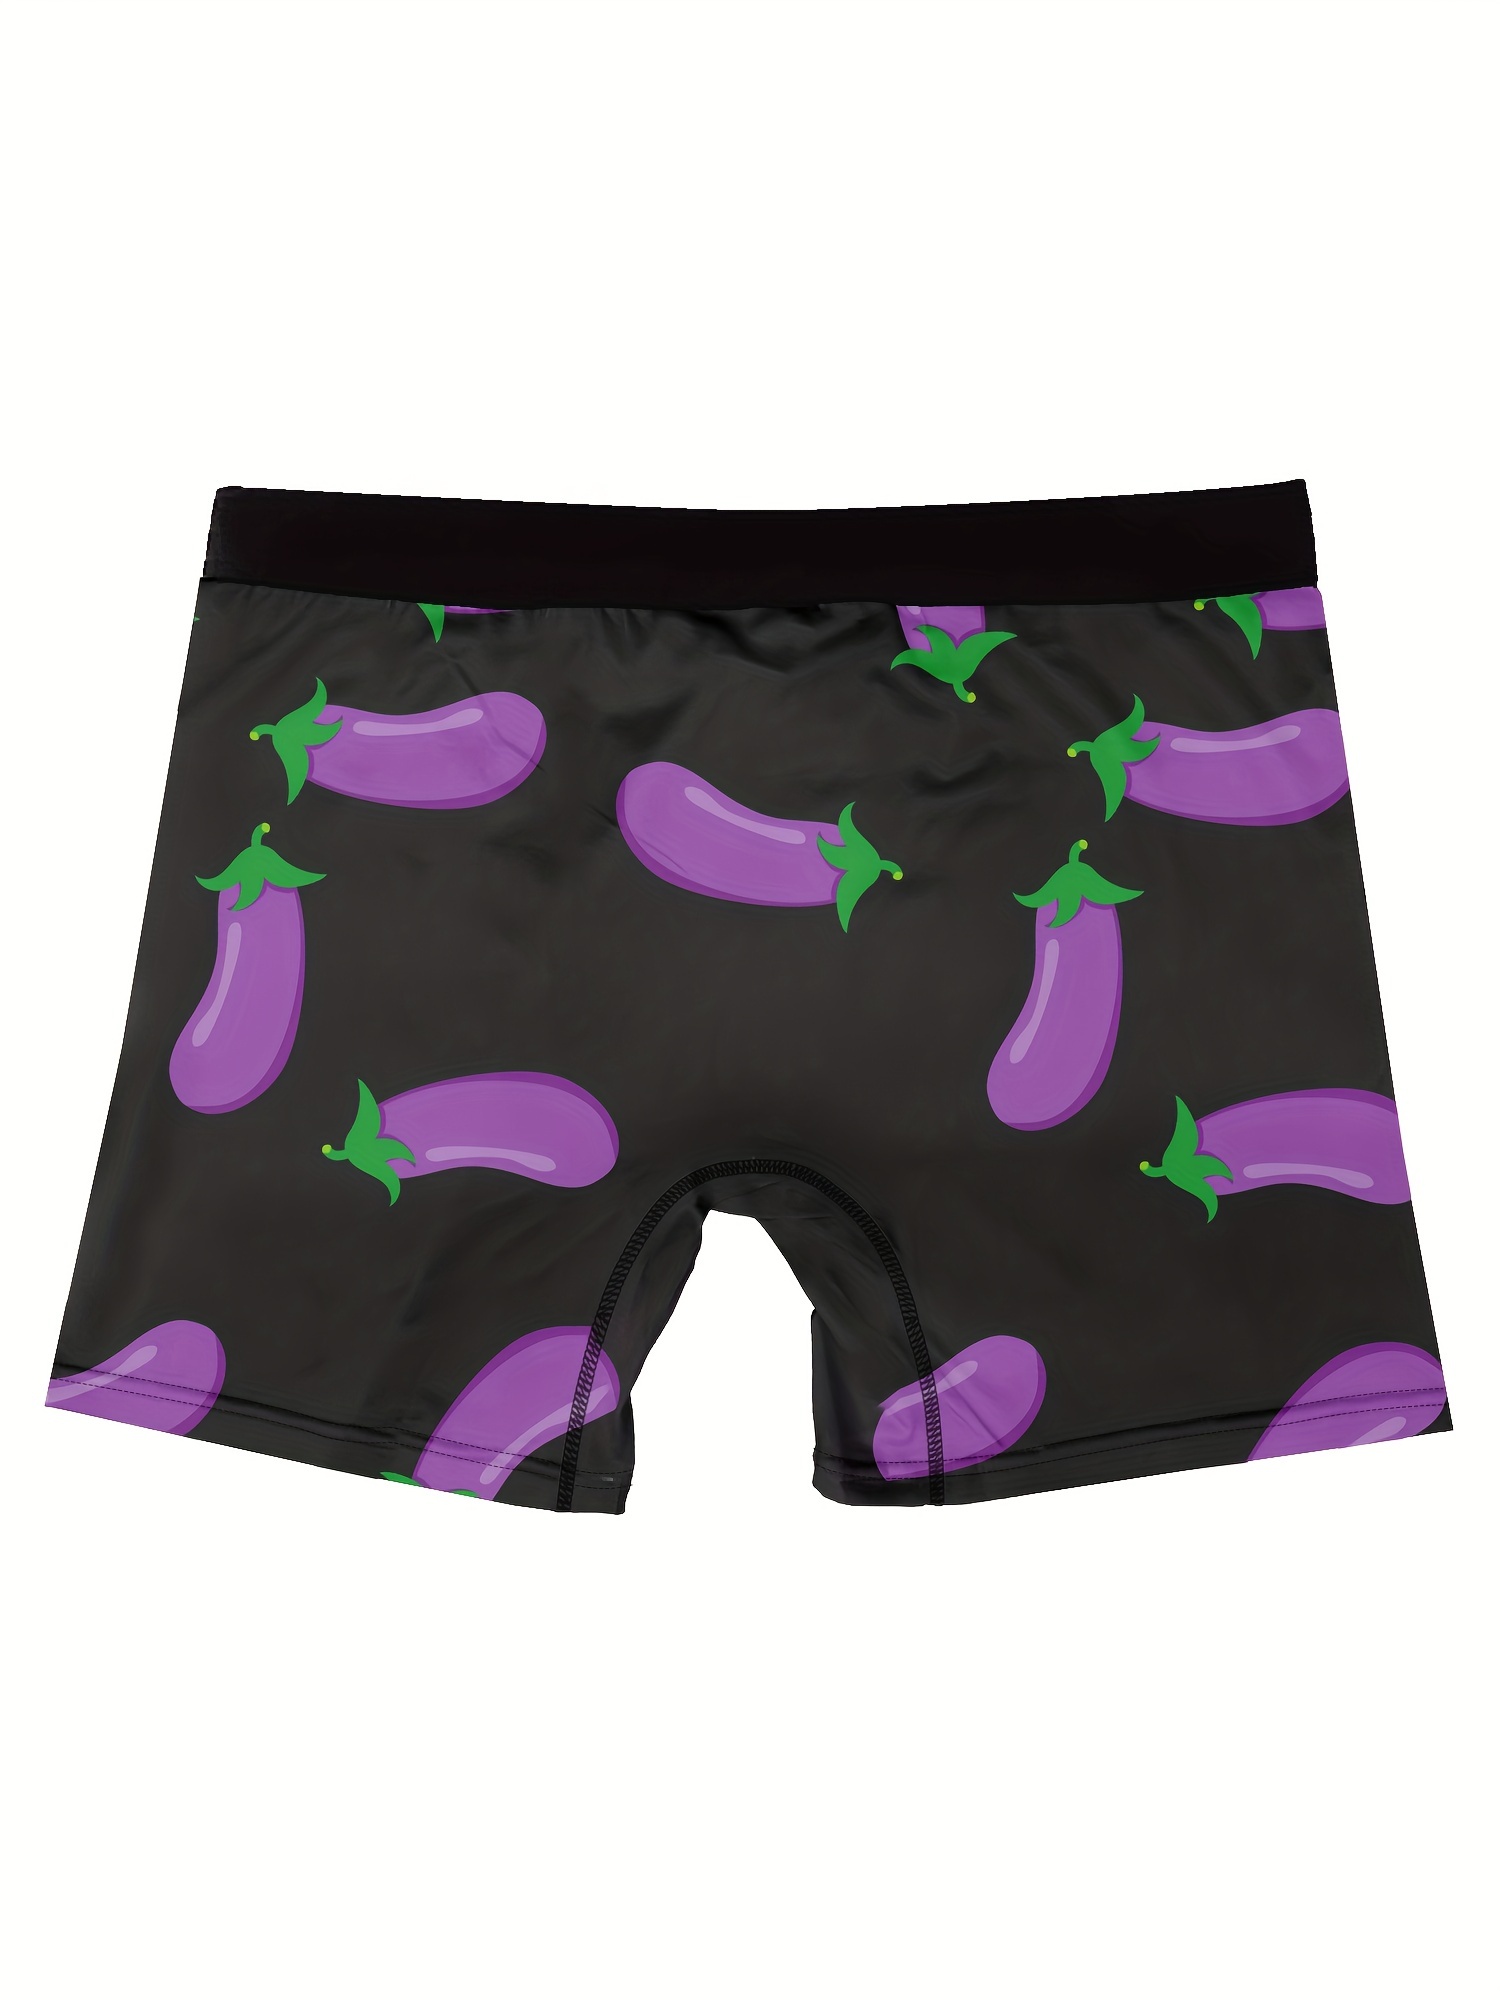 mens underwear purple eggplant print fashion novelty boxer briefs shorts breathable comfy high stretch boxer trunks details 2